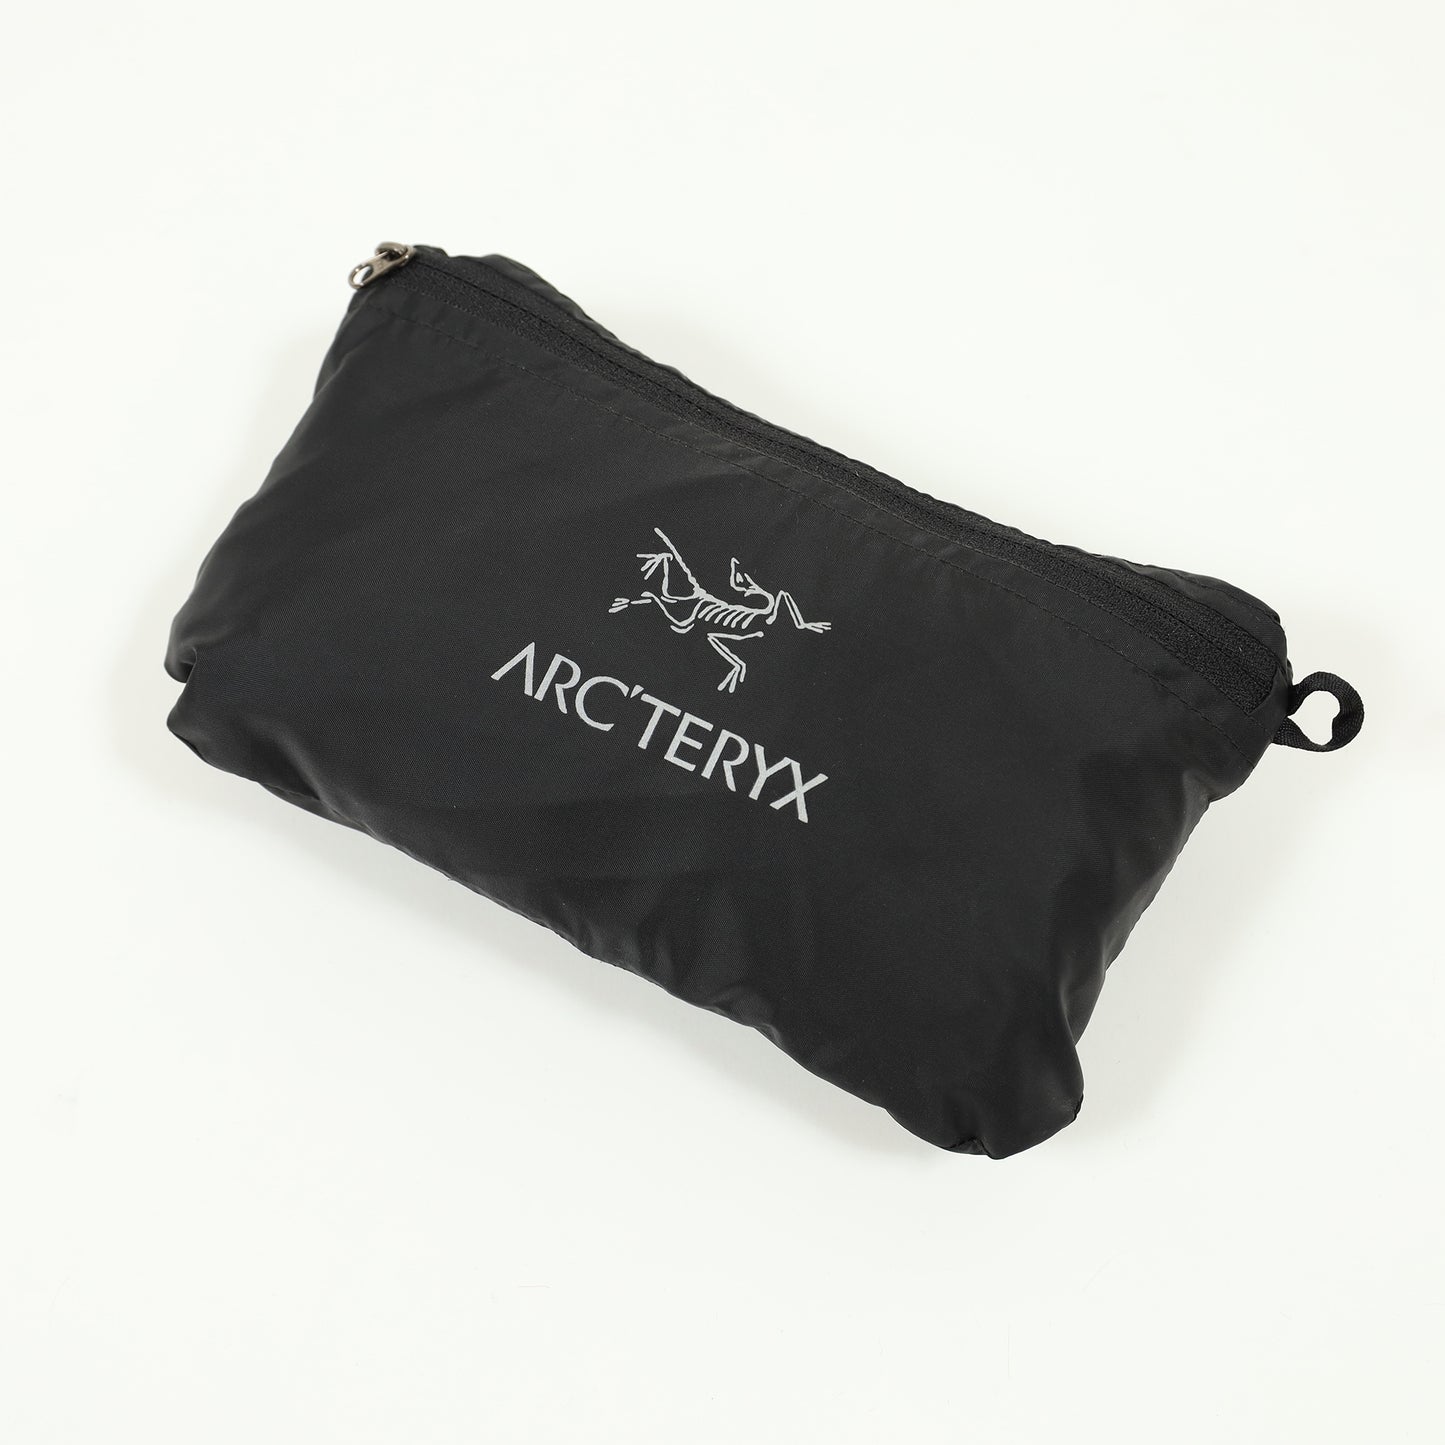 【Arc'teryx】Pack Shelter - M